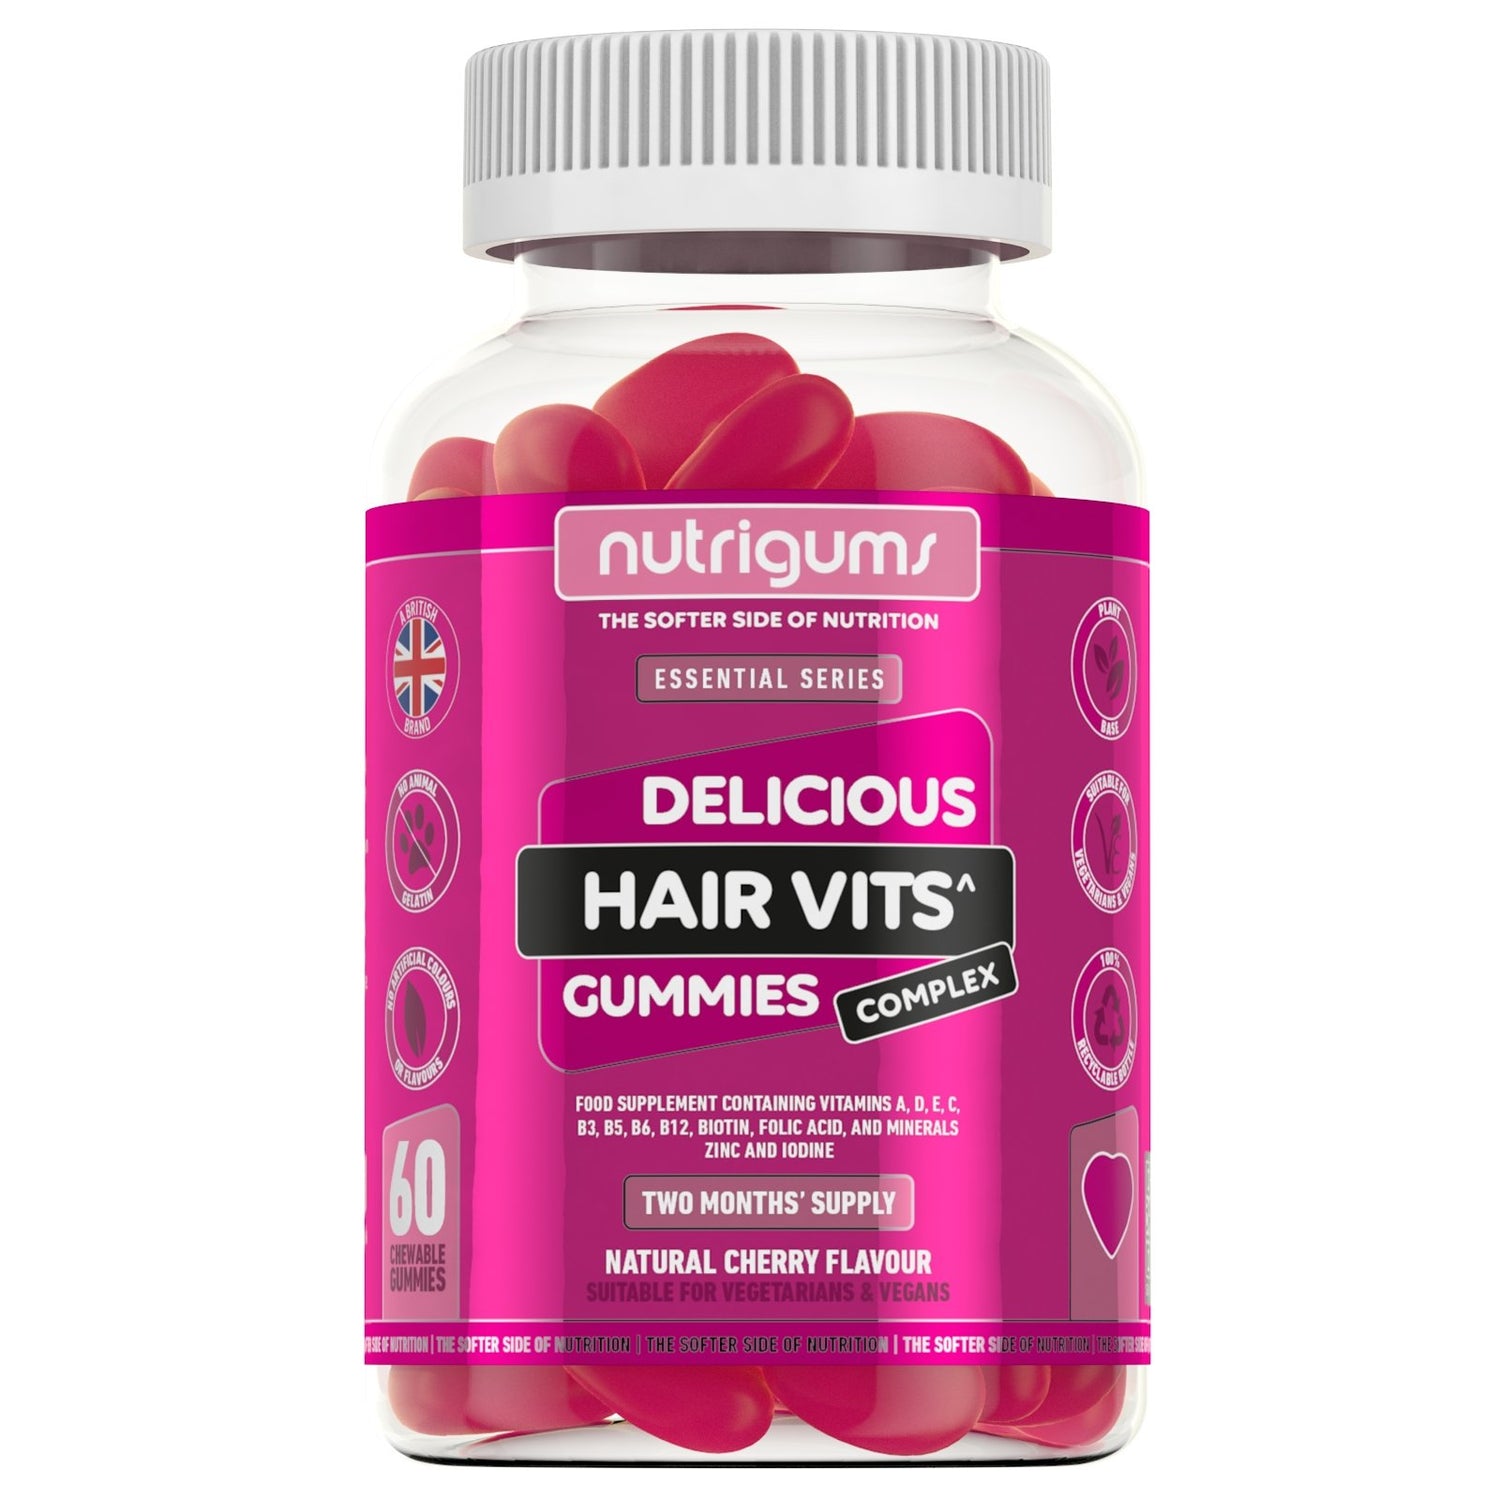 Нутригумс витамински комплекс за косу с окусом вишње веган (30 гумија) - тхескиннифоодцо